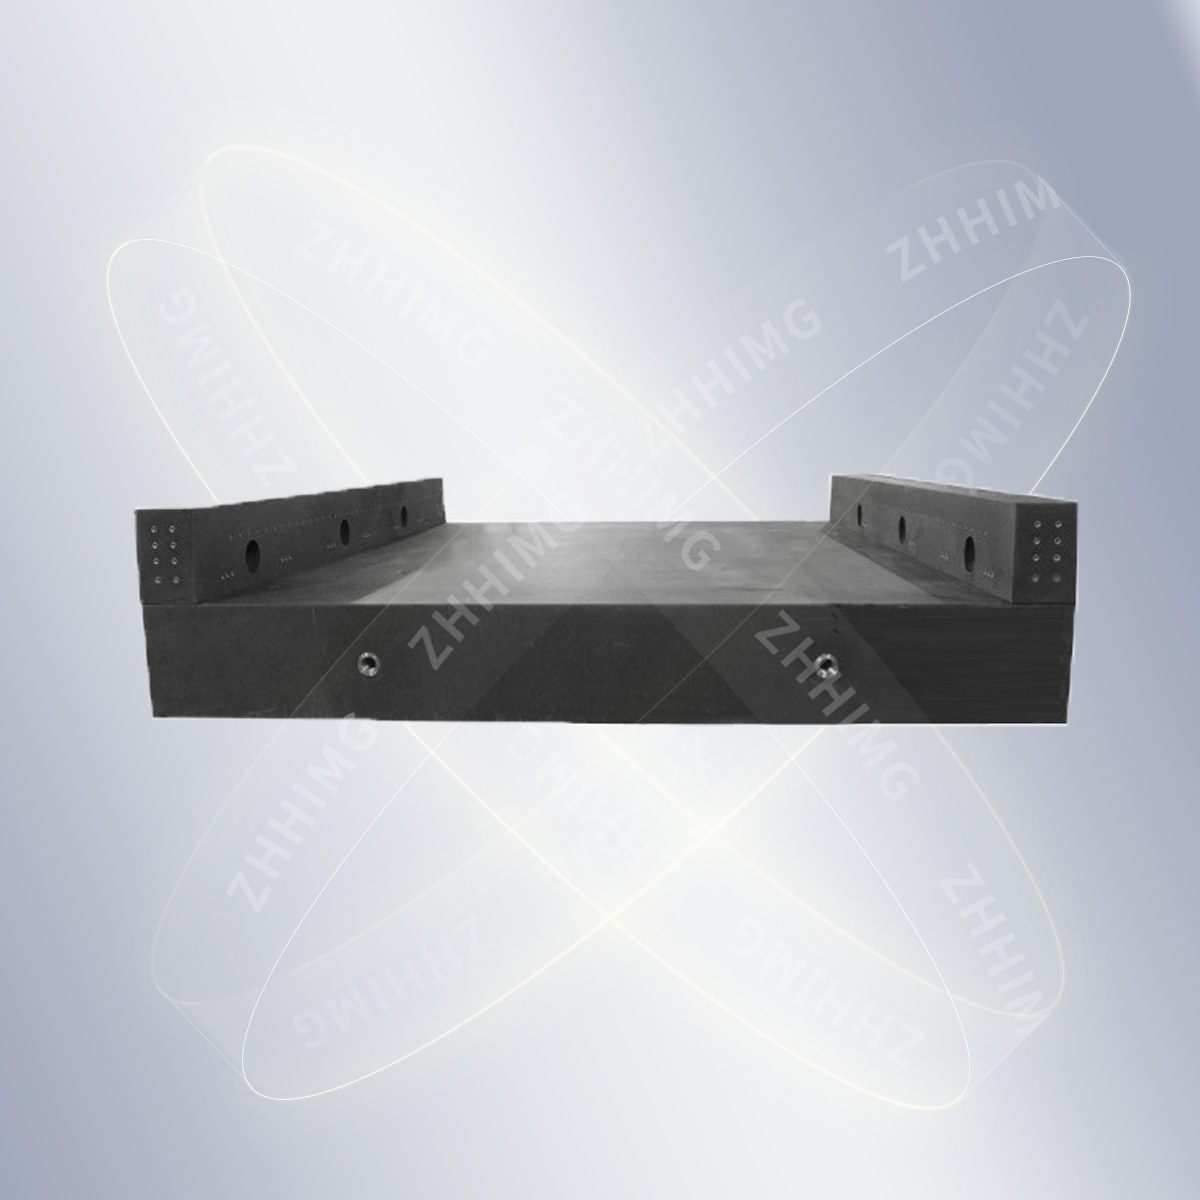 OEM/ODM Supplier Precision Granite X-Y Stages - CNC Granite Base – ZHONGHUI